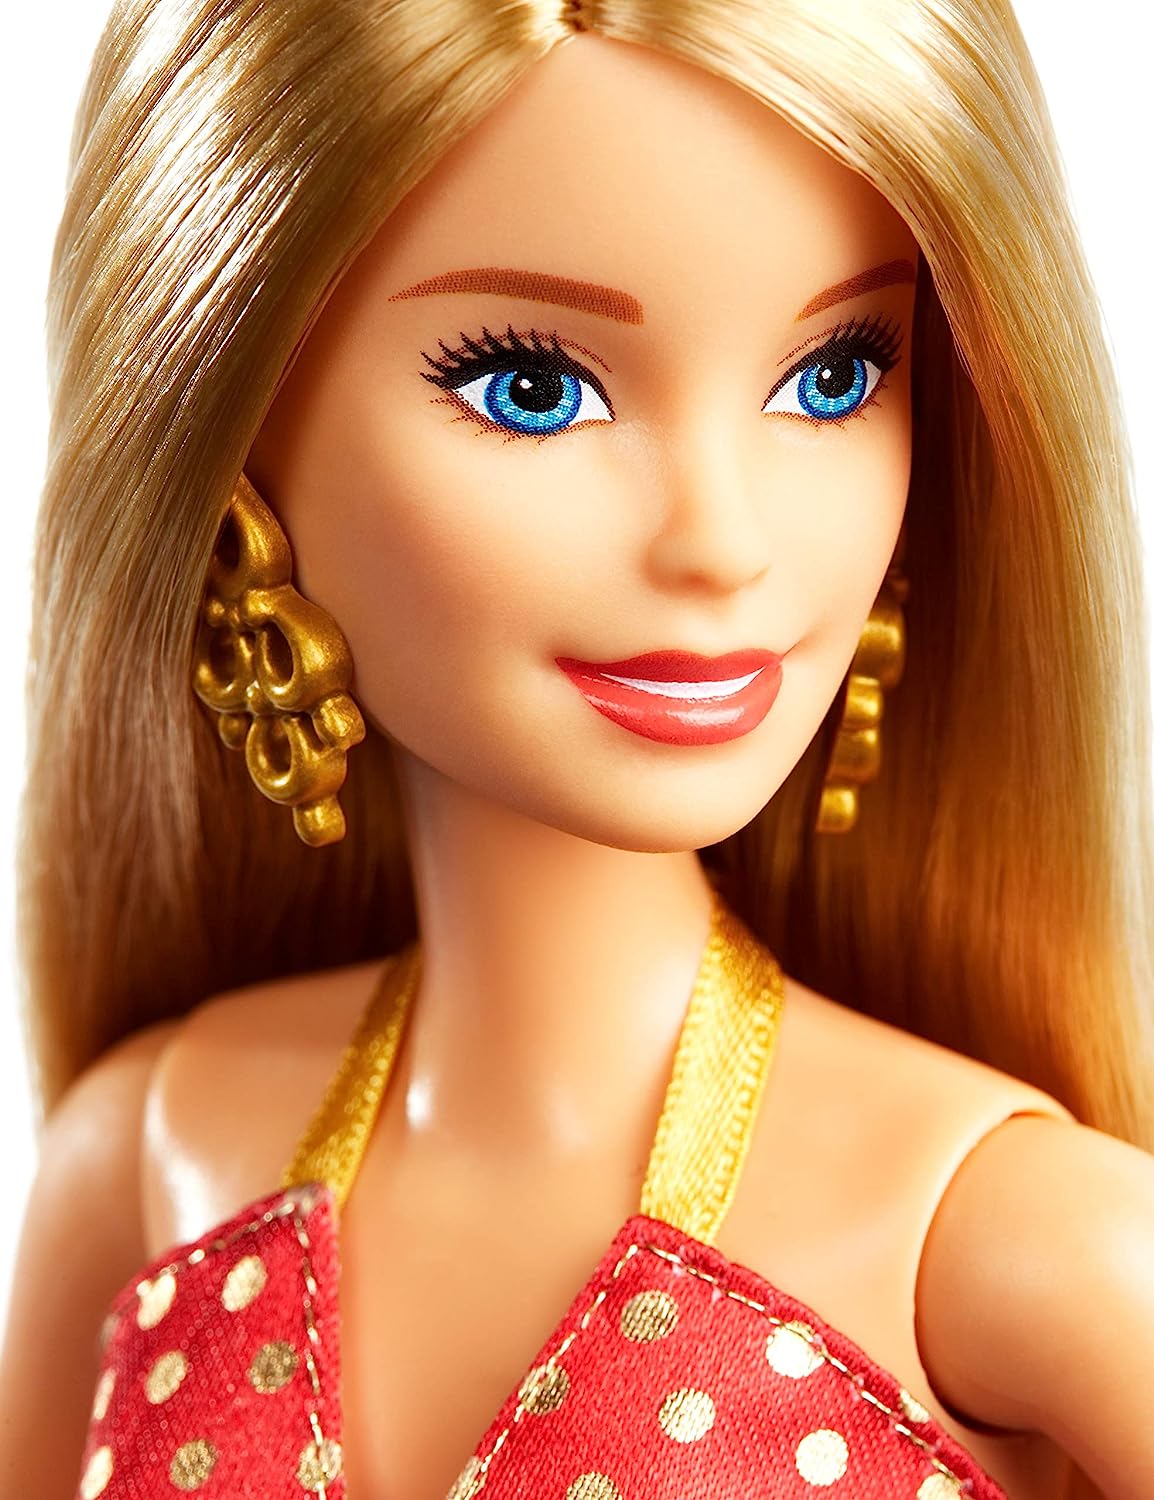 50 Off バービー バービー人形 Mattel Barbie Holiday Red And Gold Dress Gff68バービー バービー人形 肌触りがいい Www Faan Gov Ng